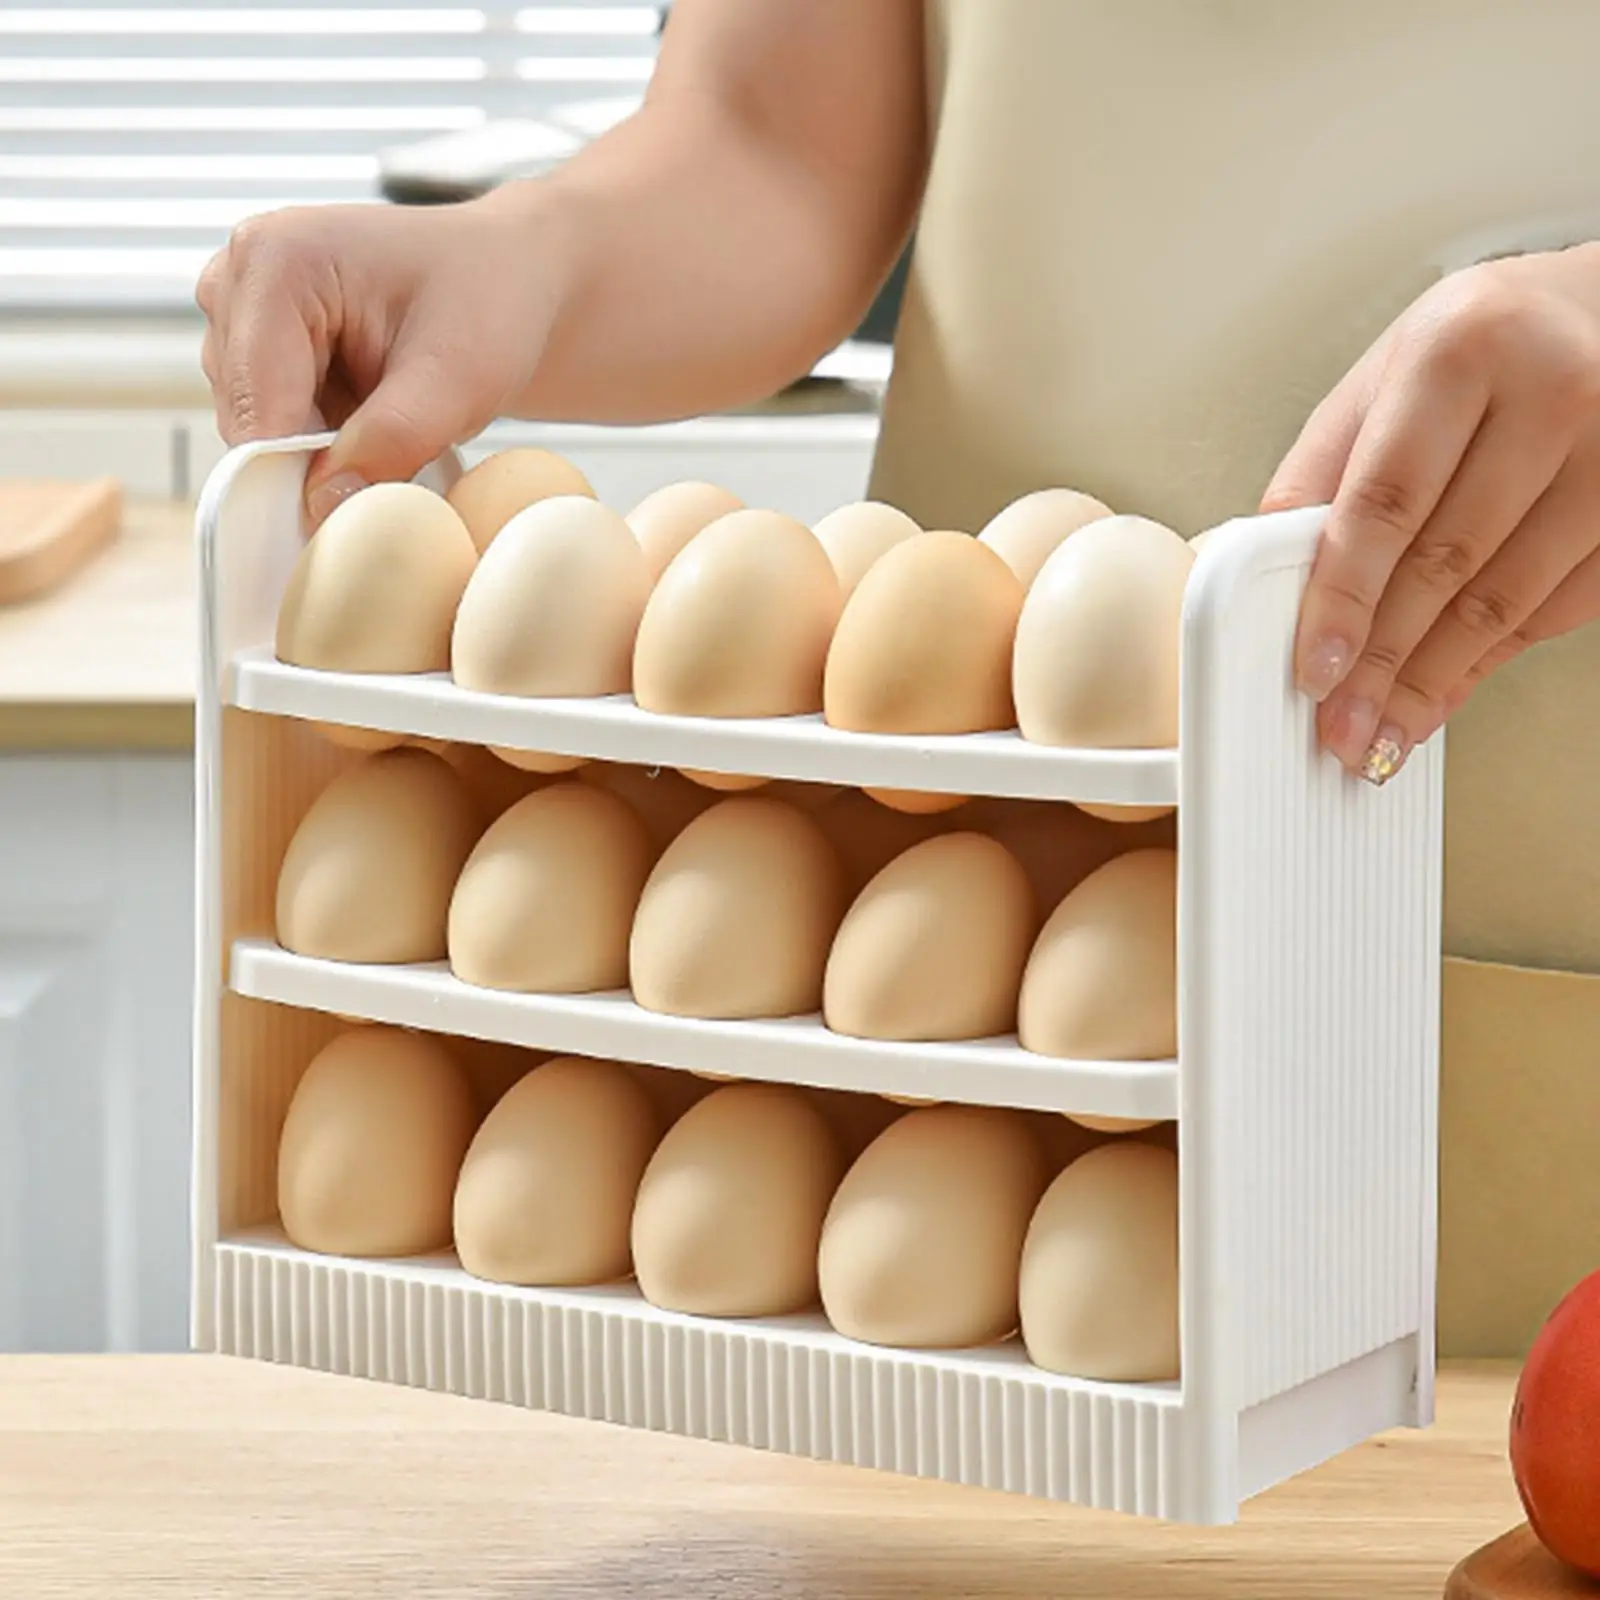 30 Grid Egg Storage Container Eggs Tray Bins Fridge Eggs Organizers Egg Holder for Kitchen Cabinet Drawer Shelf Countertop